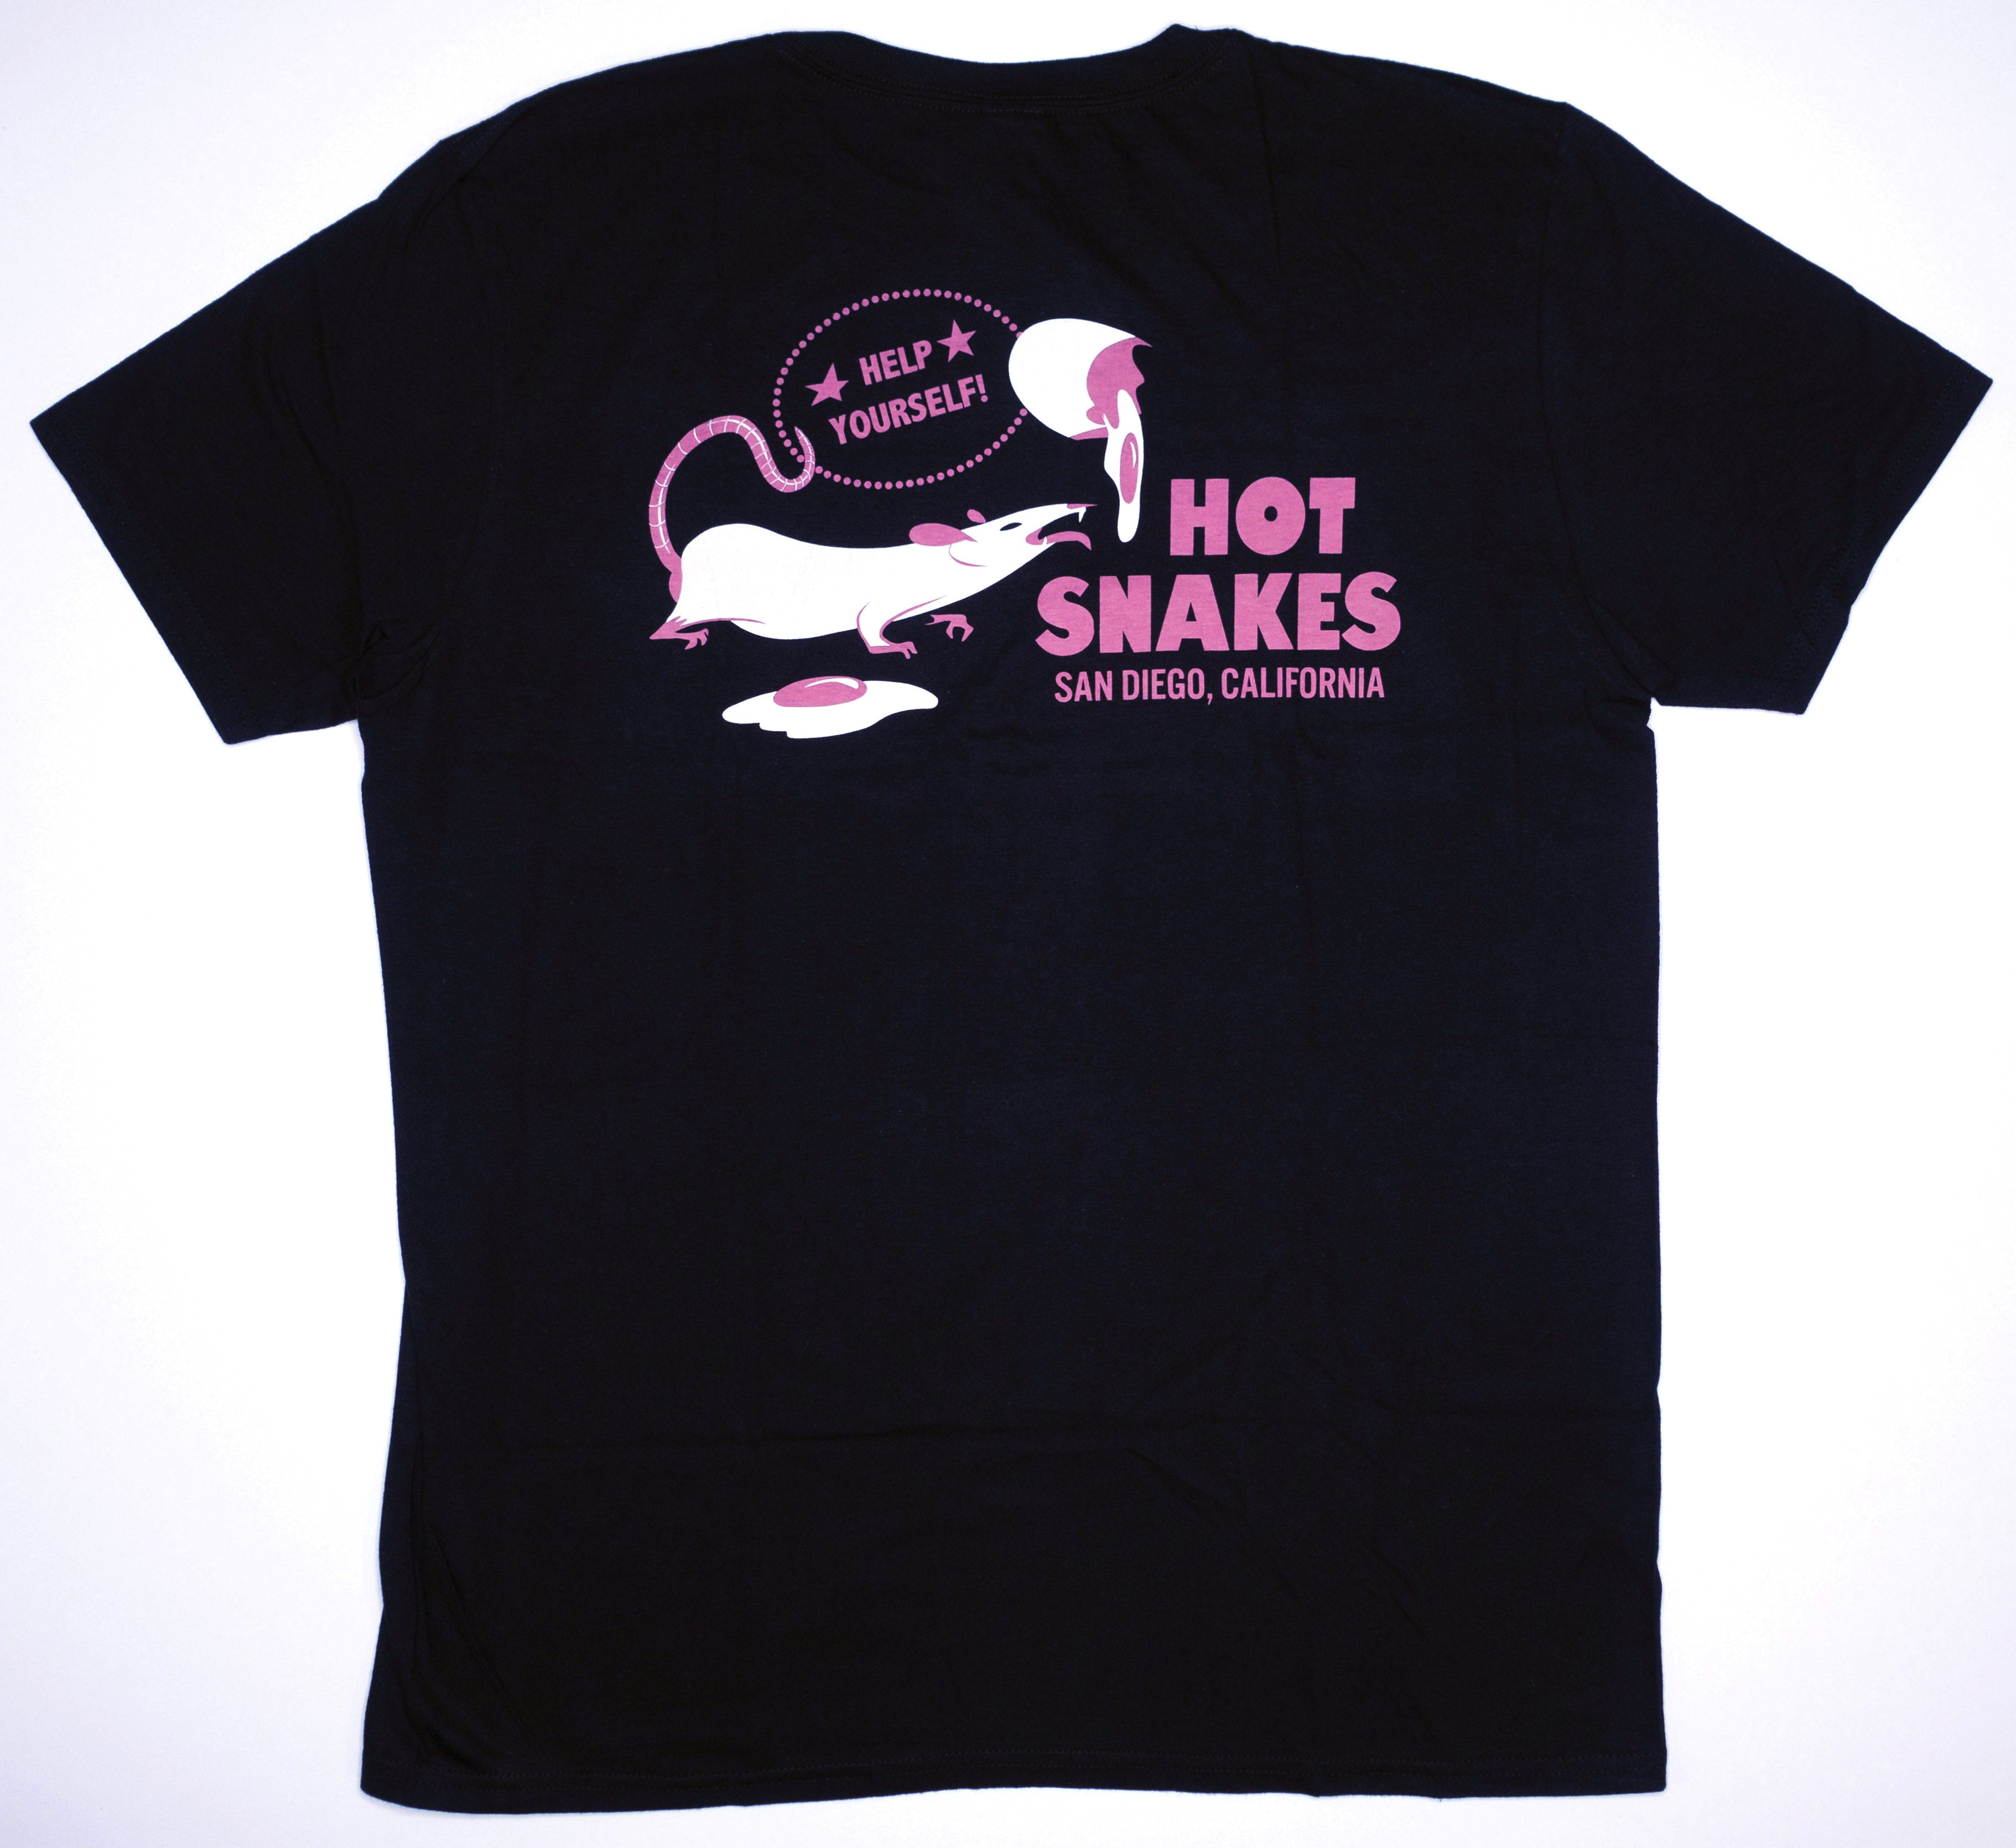 Hot Snakes - Help Yourself Rat Tour Shirt Size Large